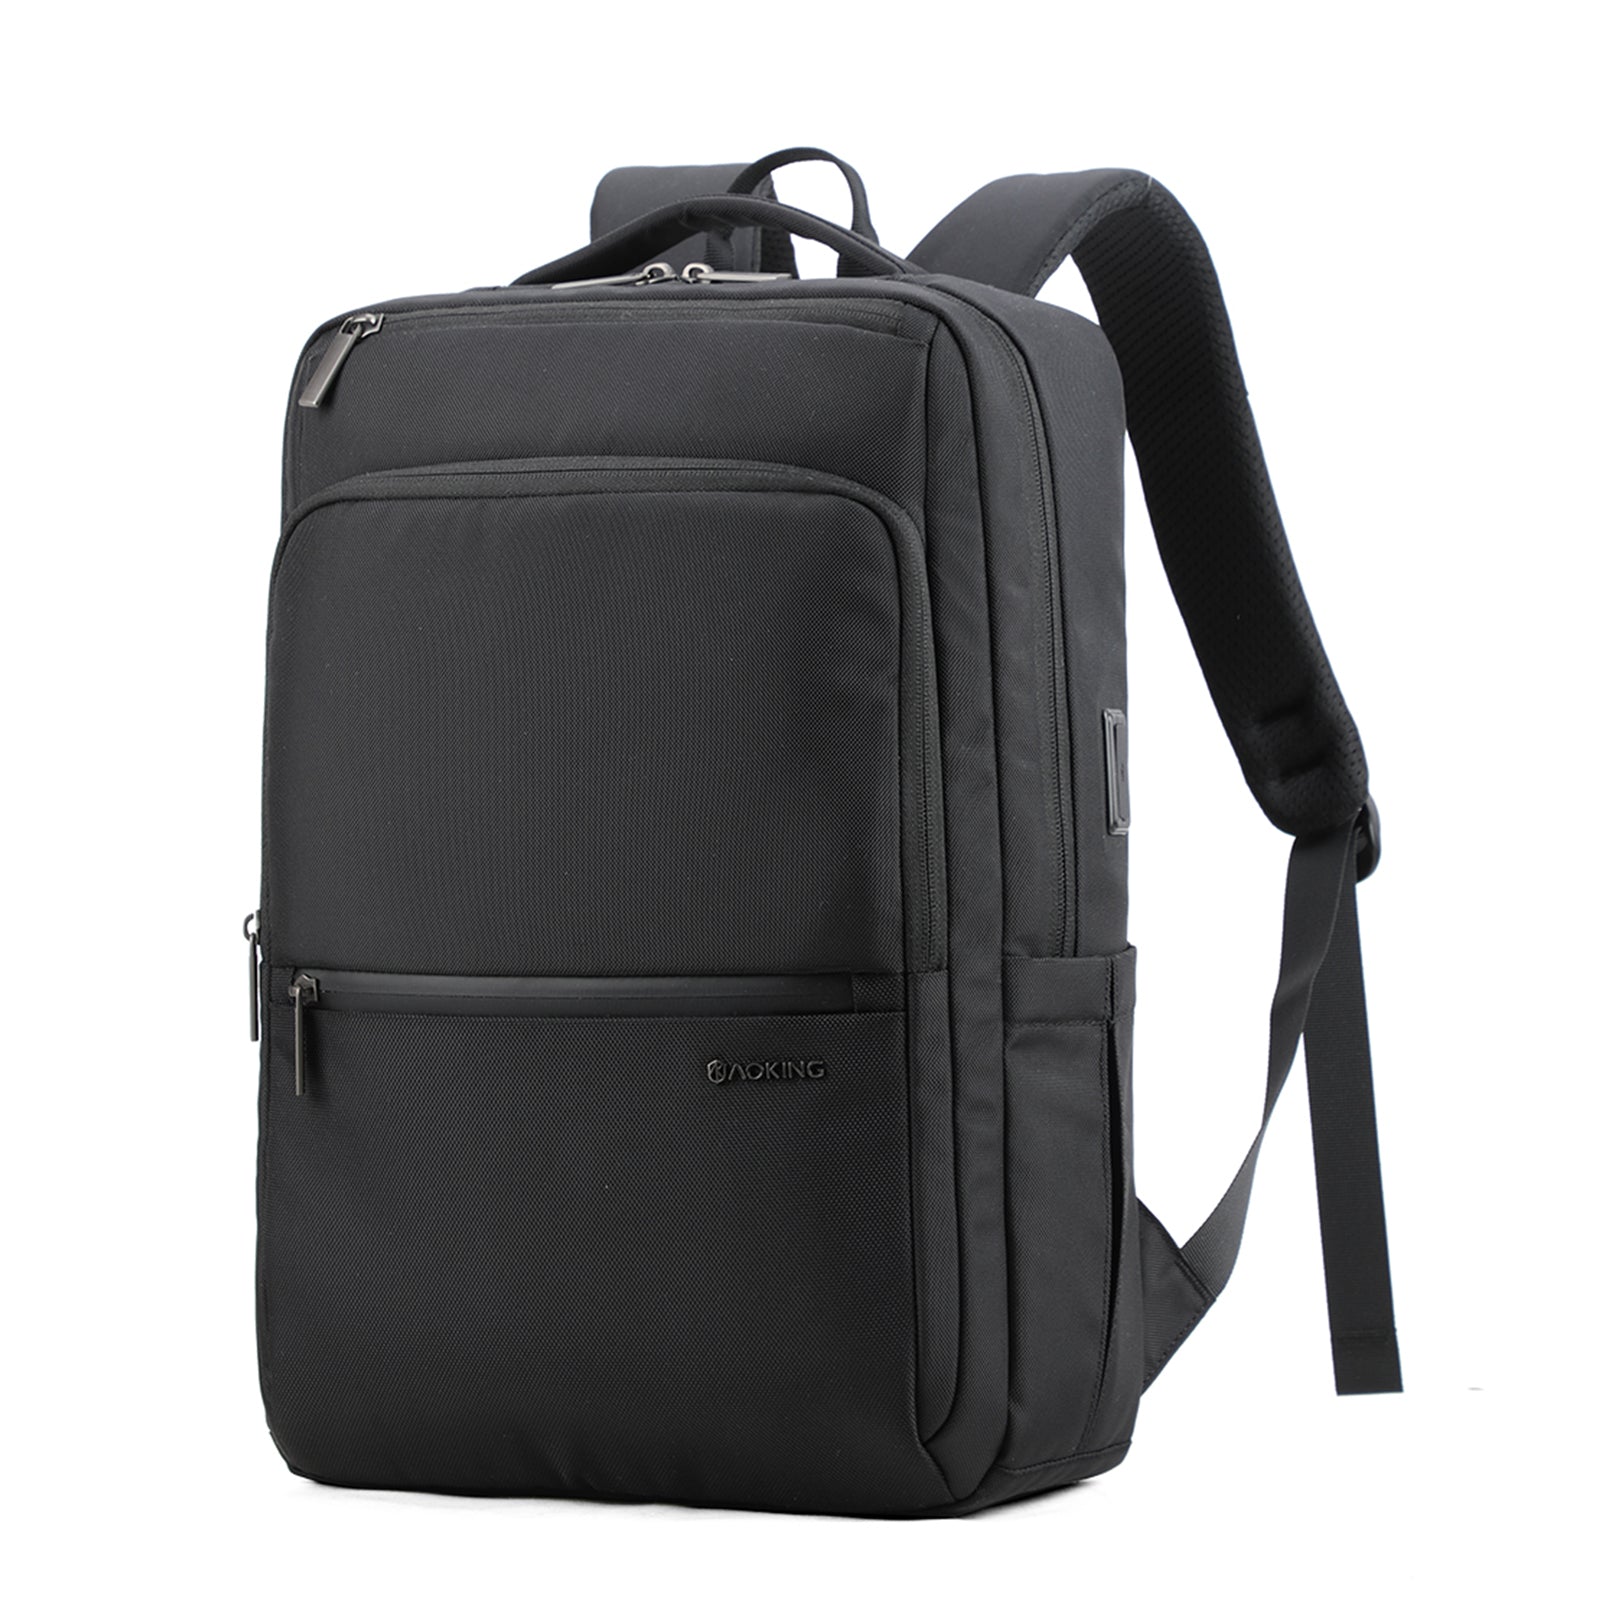 Aoking Business Laptop Backpack SN1428 Black